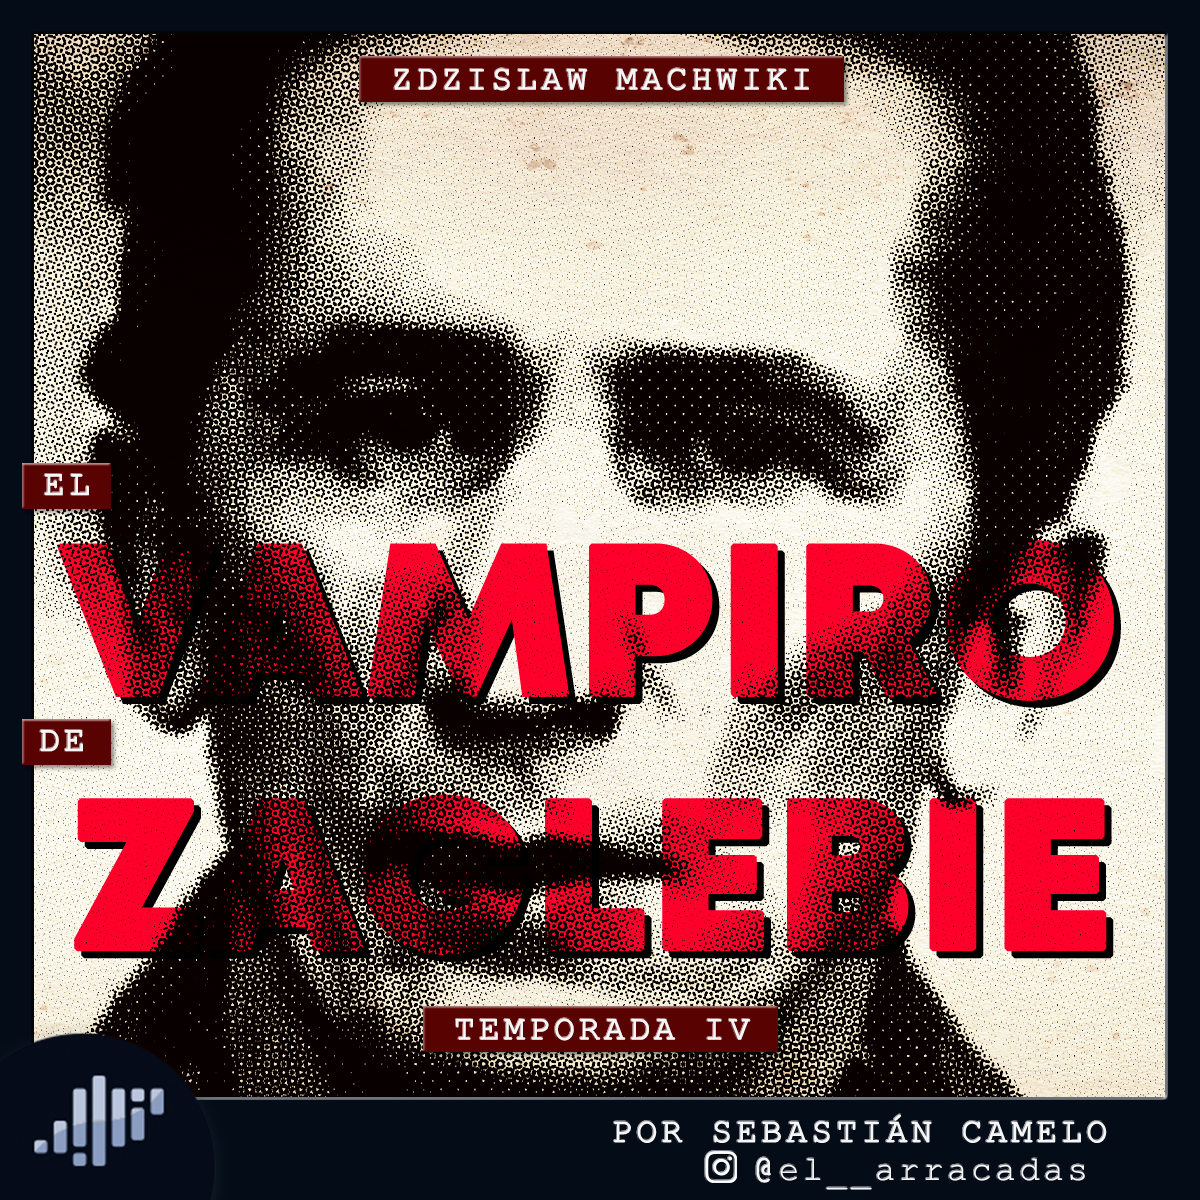 Serialmente: Zdzislaw Machwiki | El Vampiro de Zaglebie